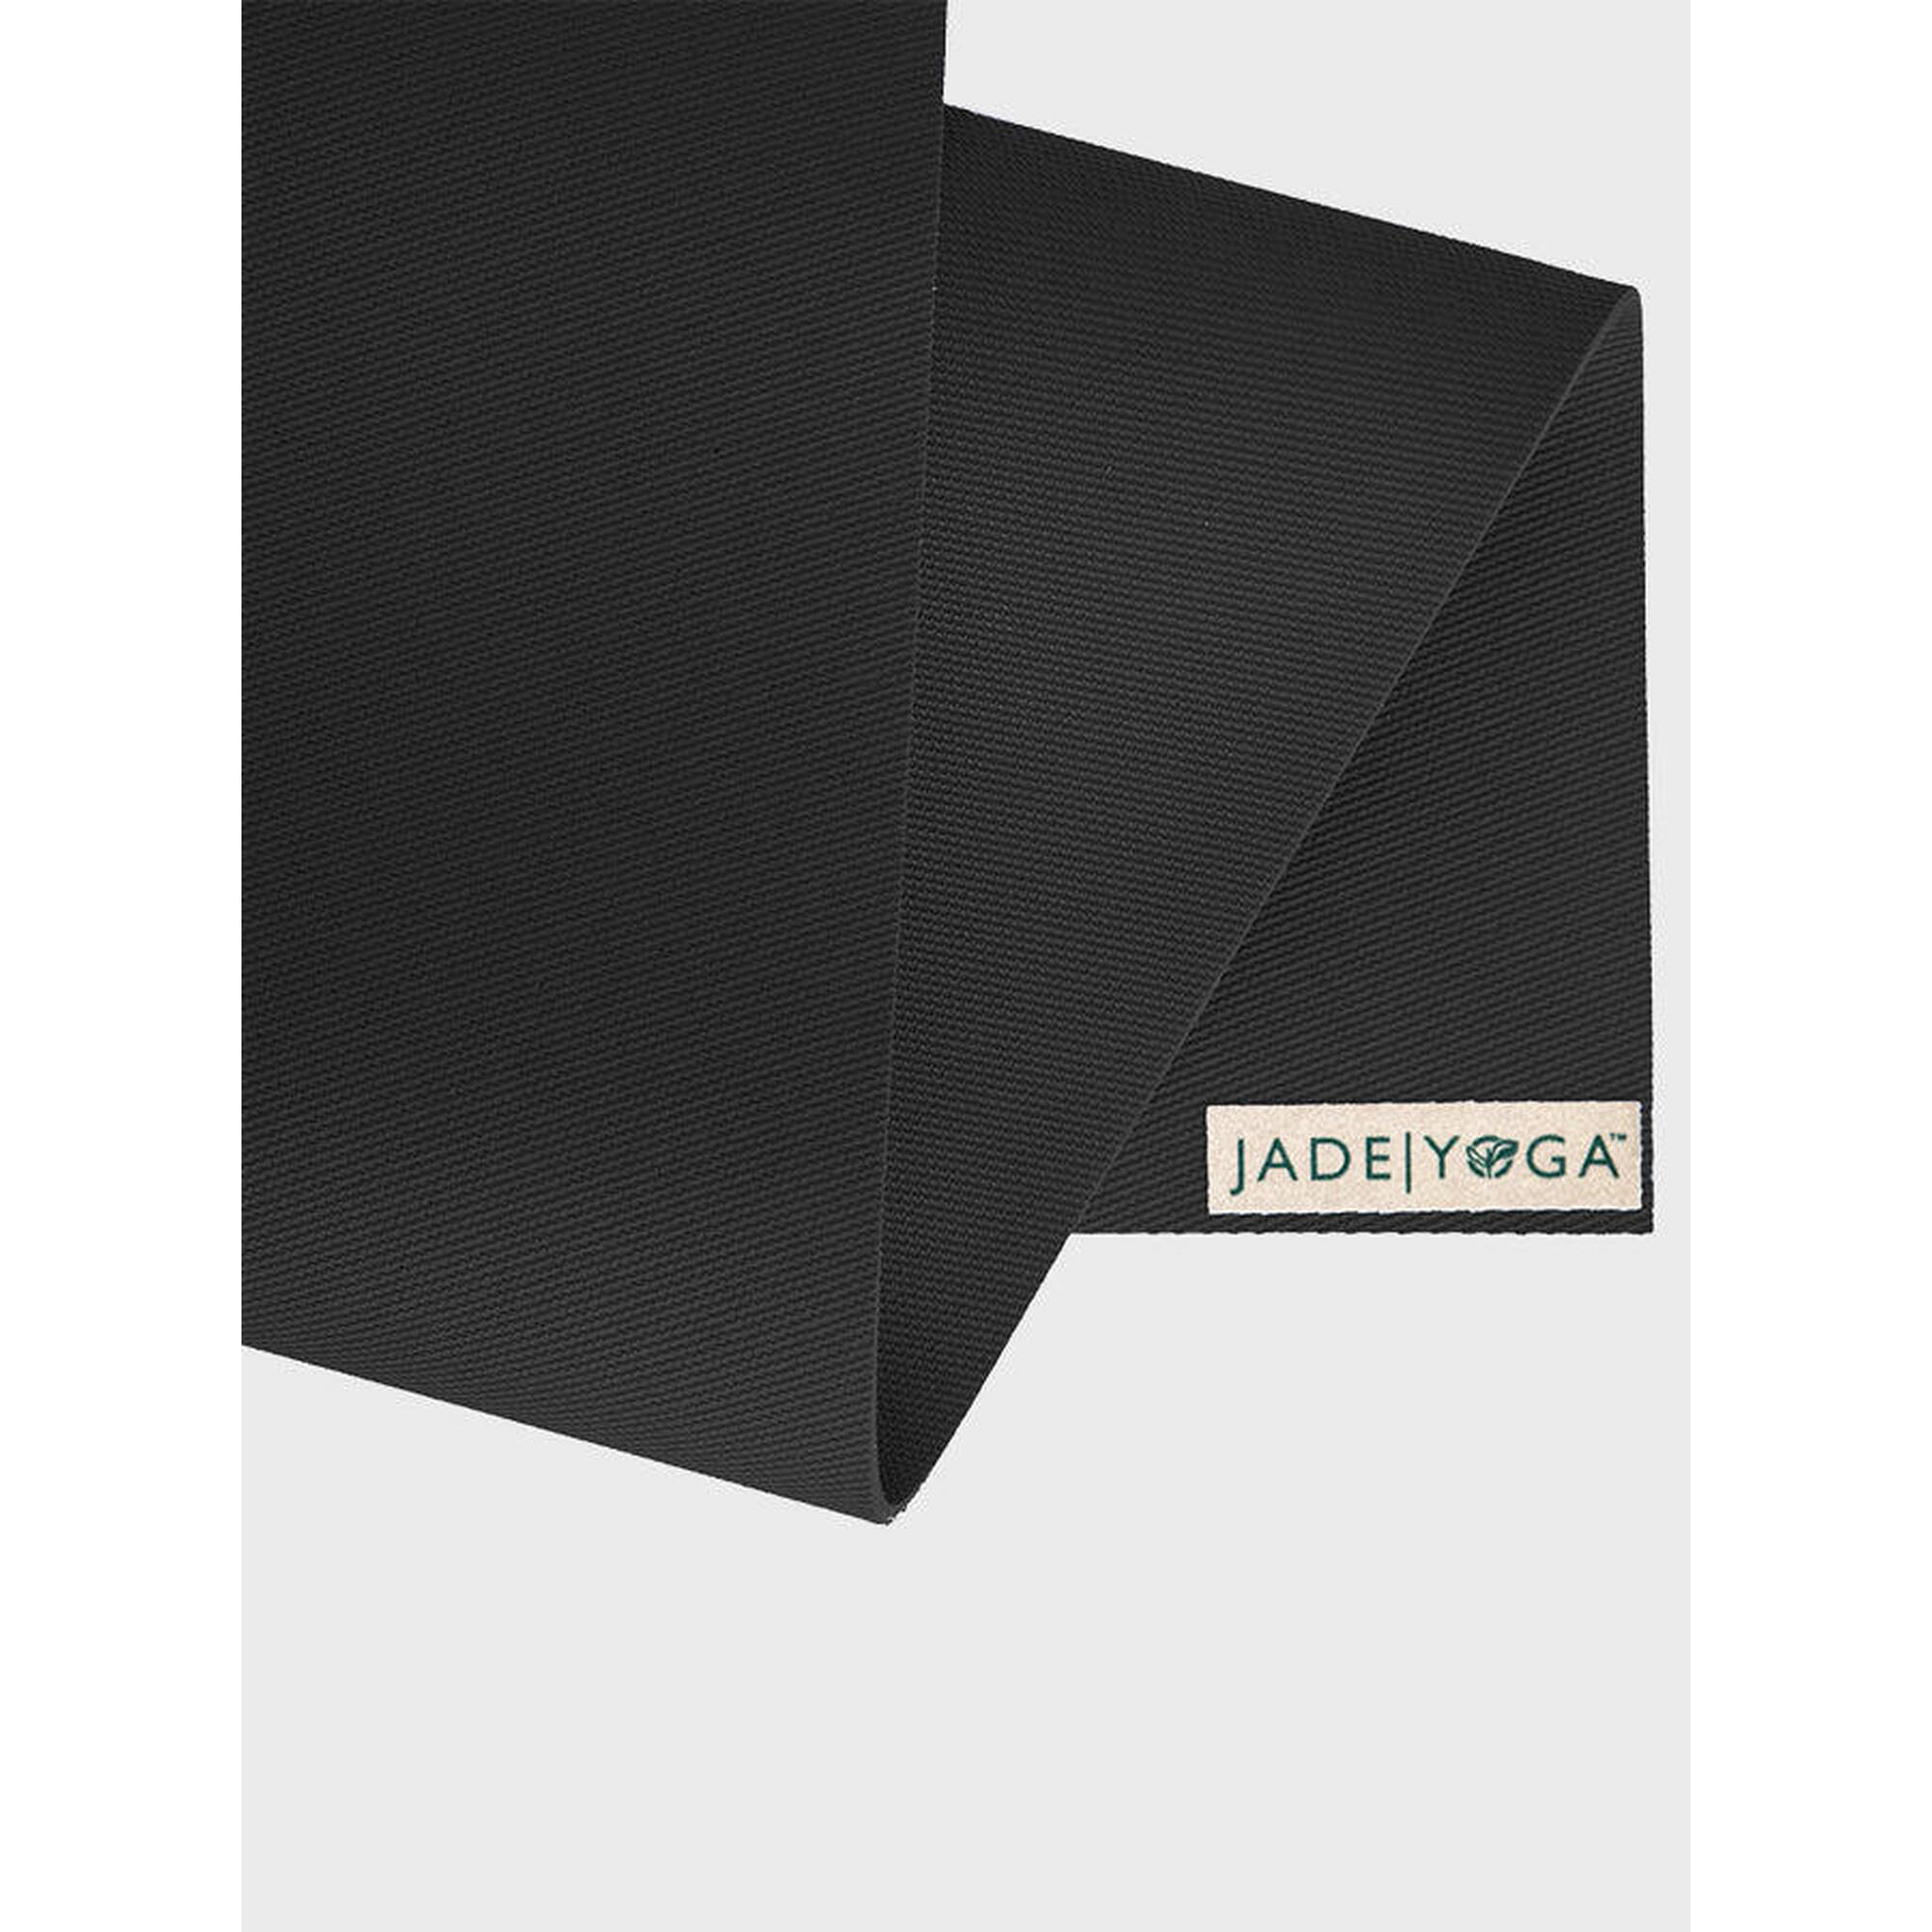 JADE YOGA Jade Yoga Harmony 68 Inch Yoga Mat 5mm - Black